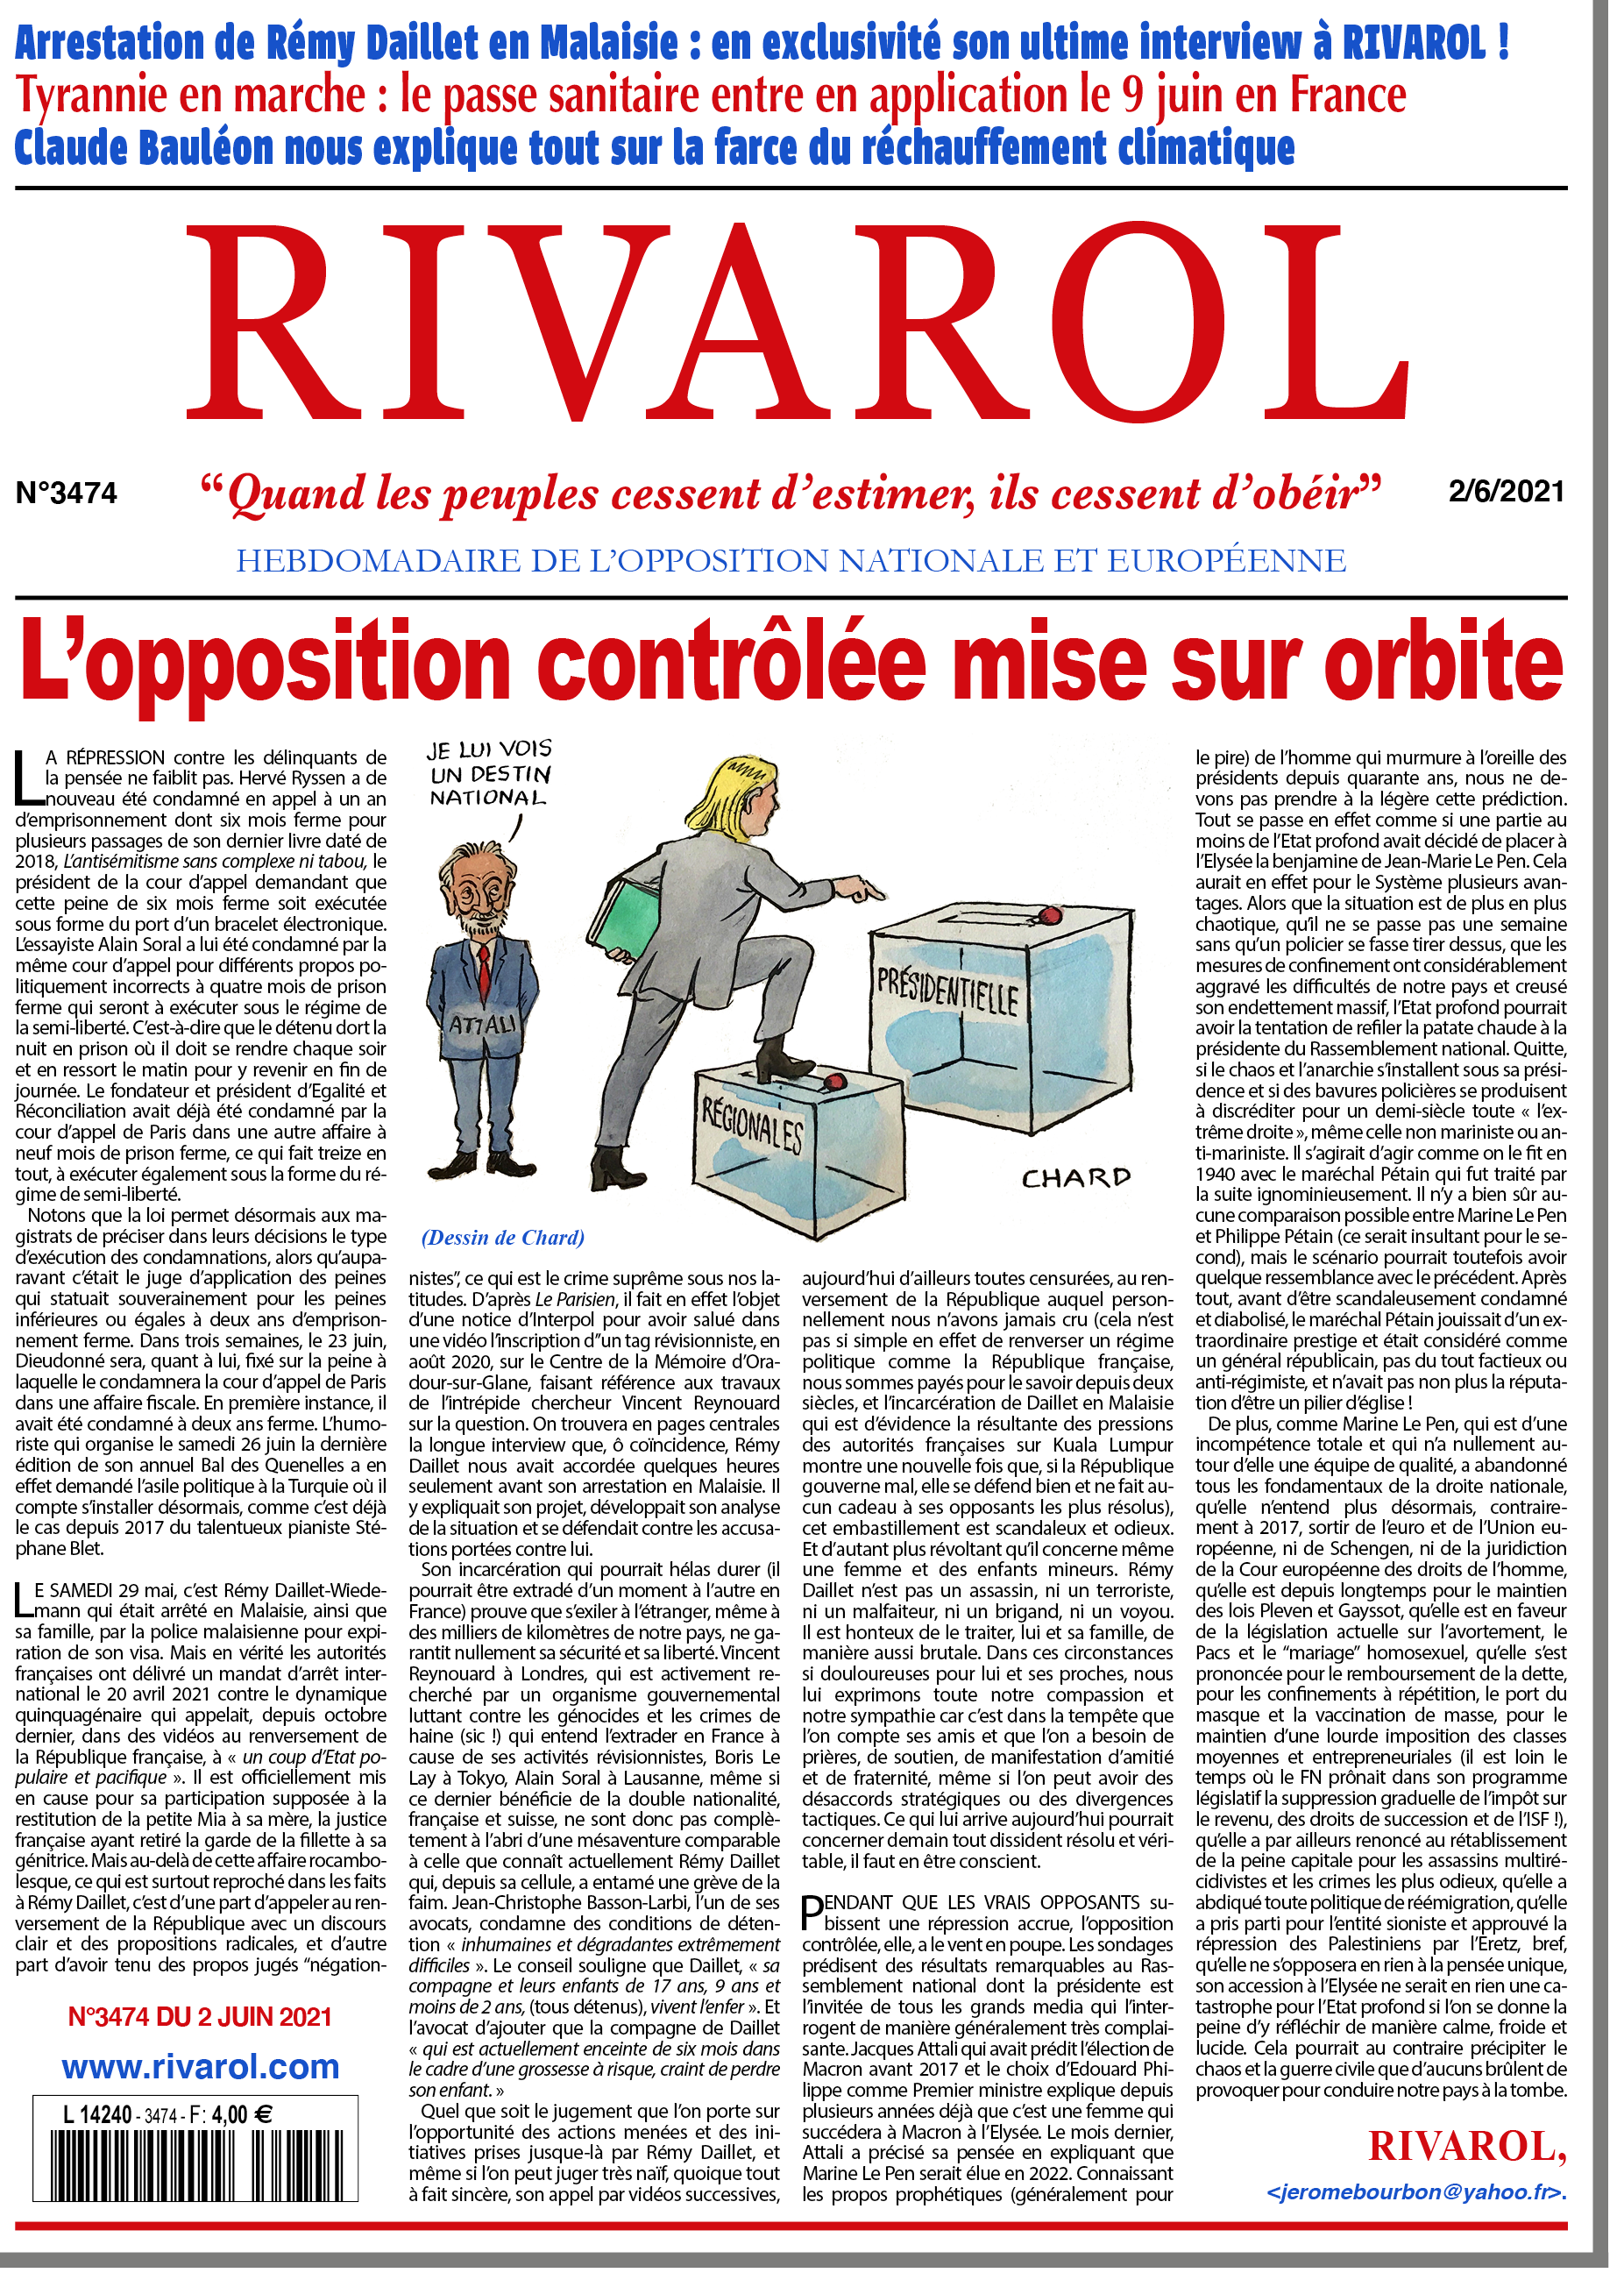 Rivarol n°3474 du 2/6/2021